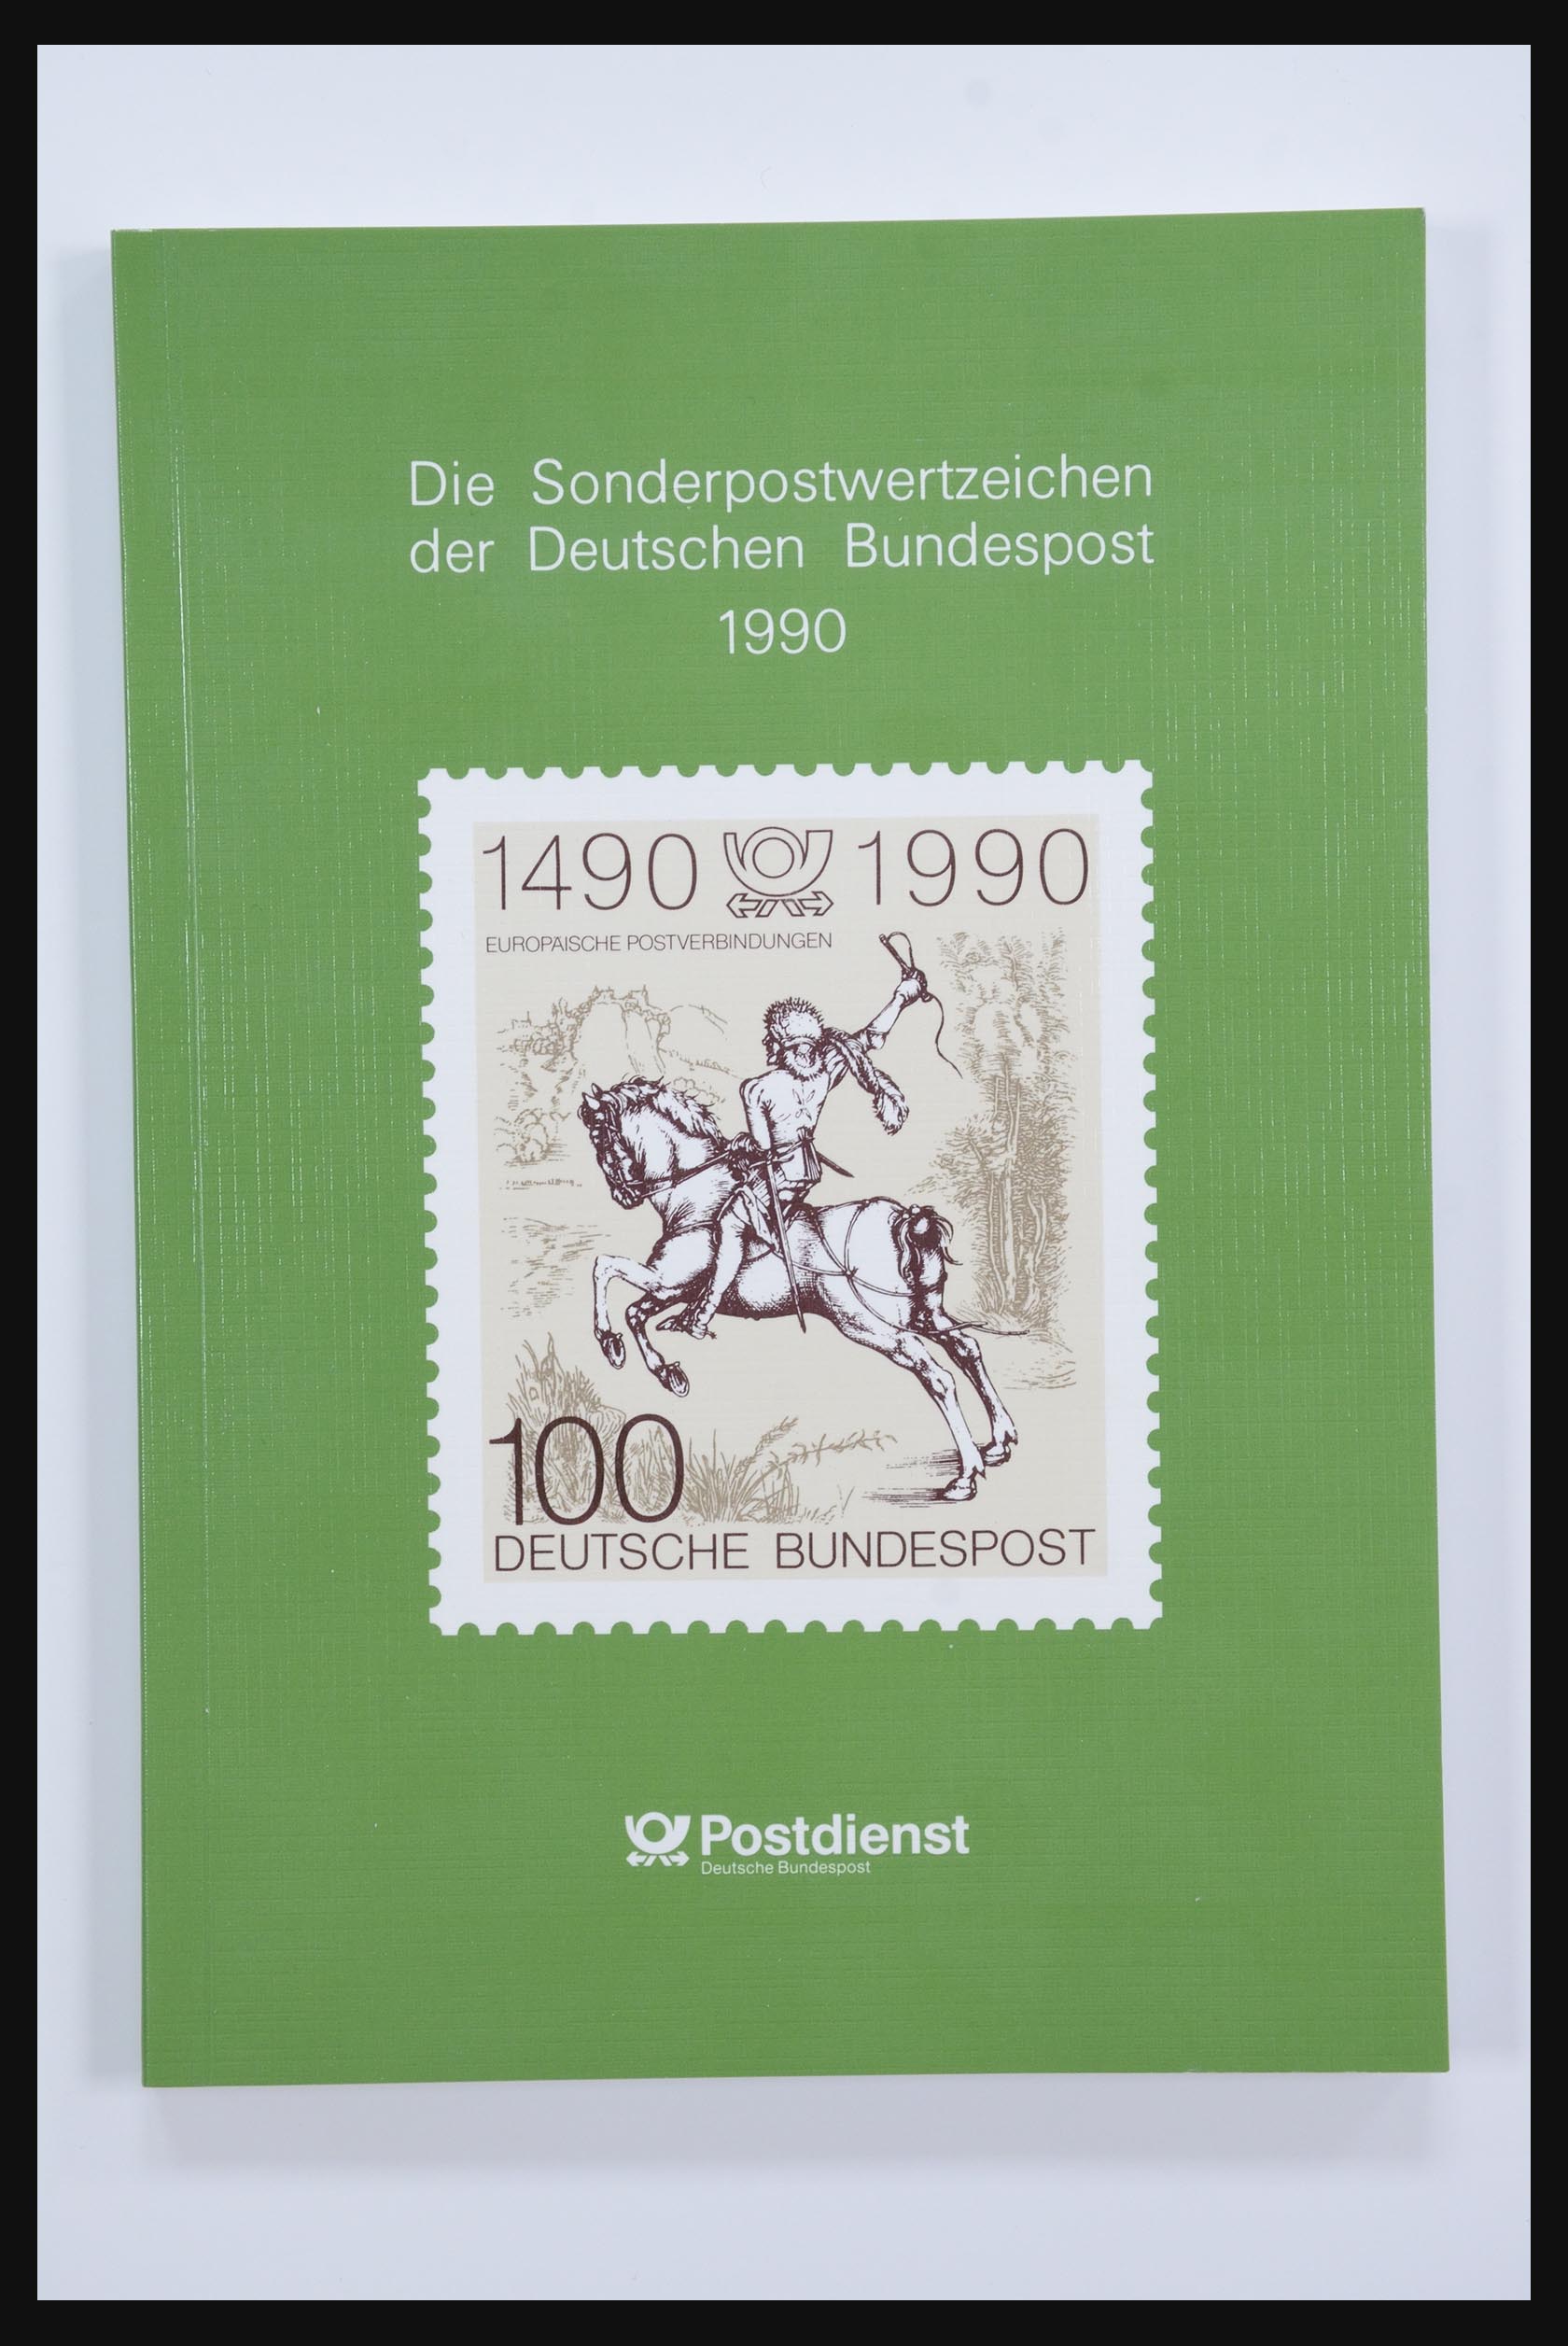 31836 017 - 31836 Bundespost yearbooks 1974-1999.